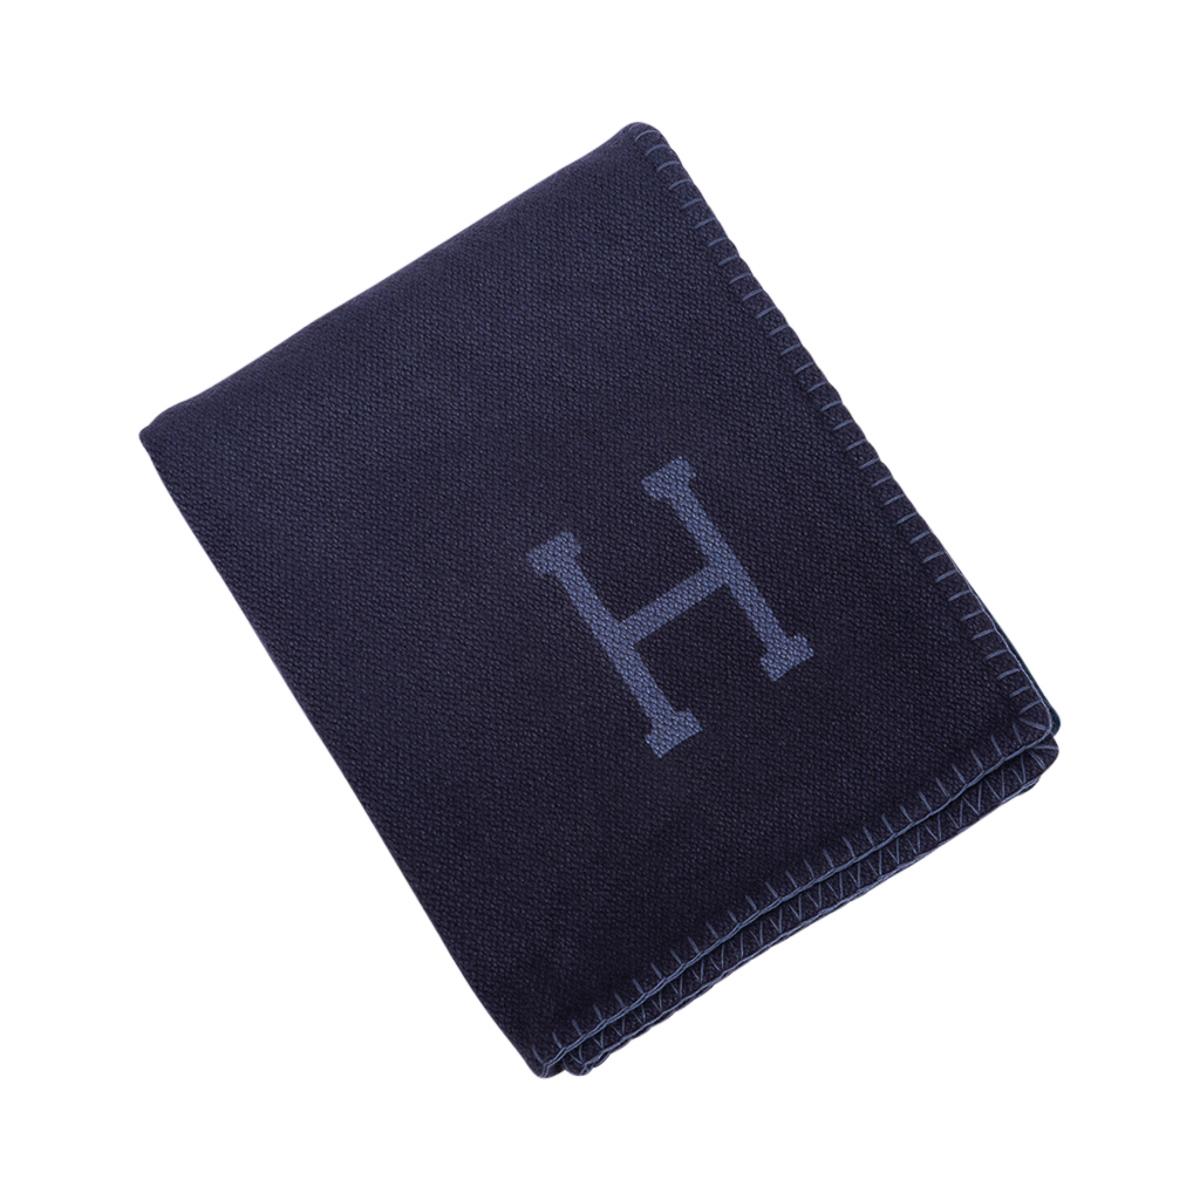 Hermes Yack 'n' Dye Ombre Blanket Anthracite 3